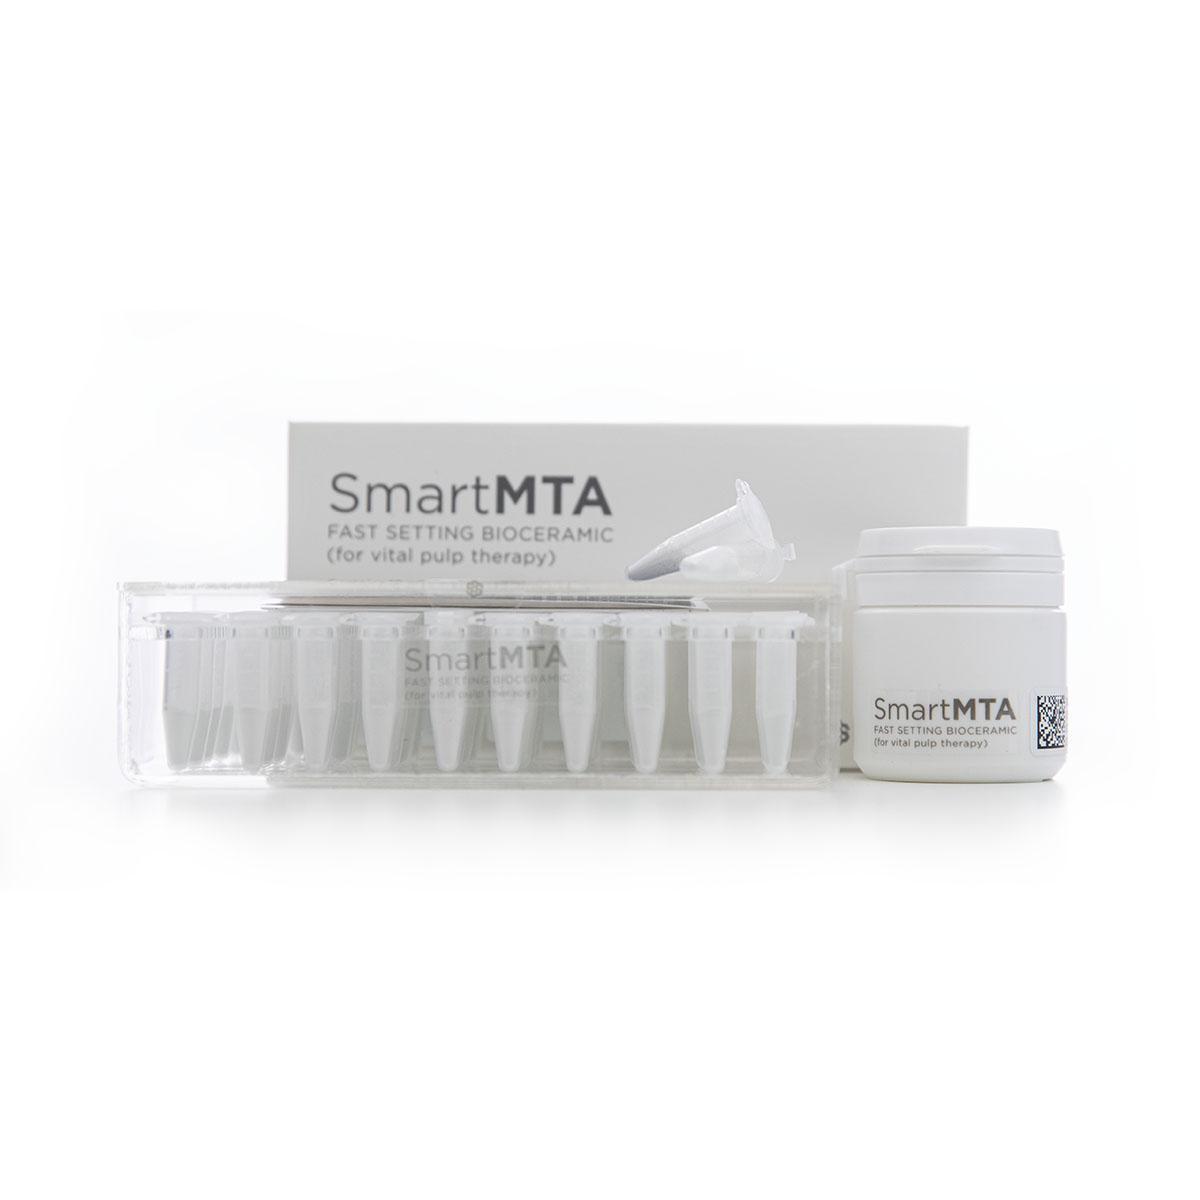 sprig smartMTA vial